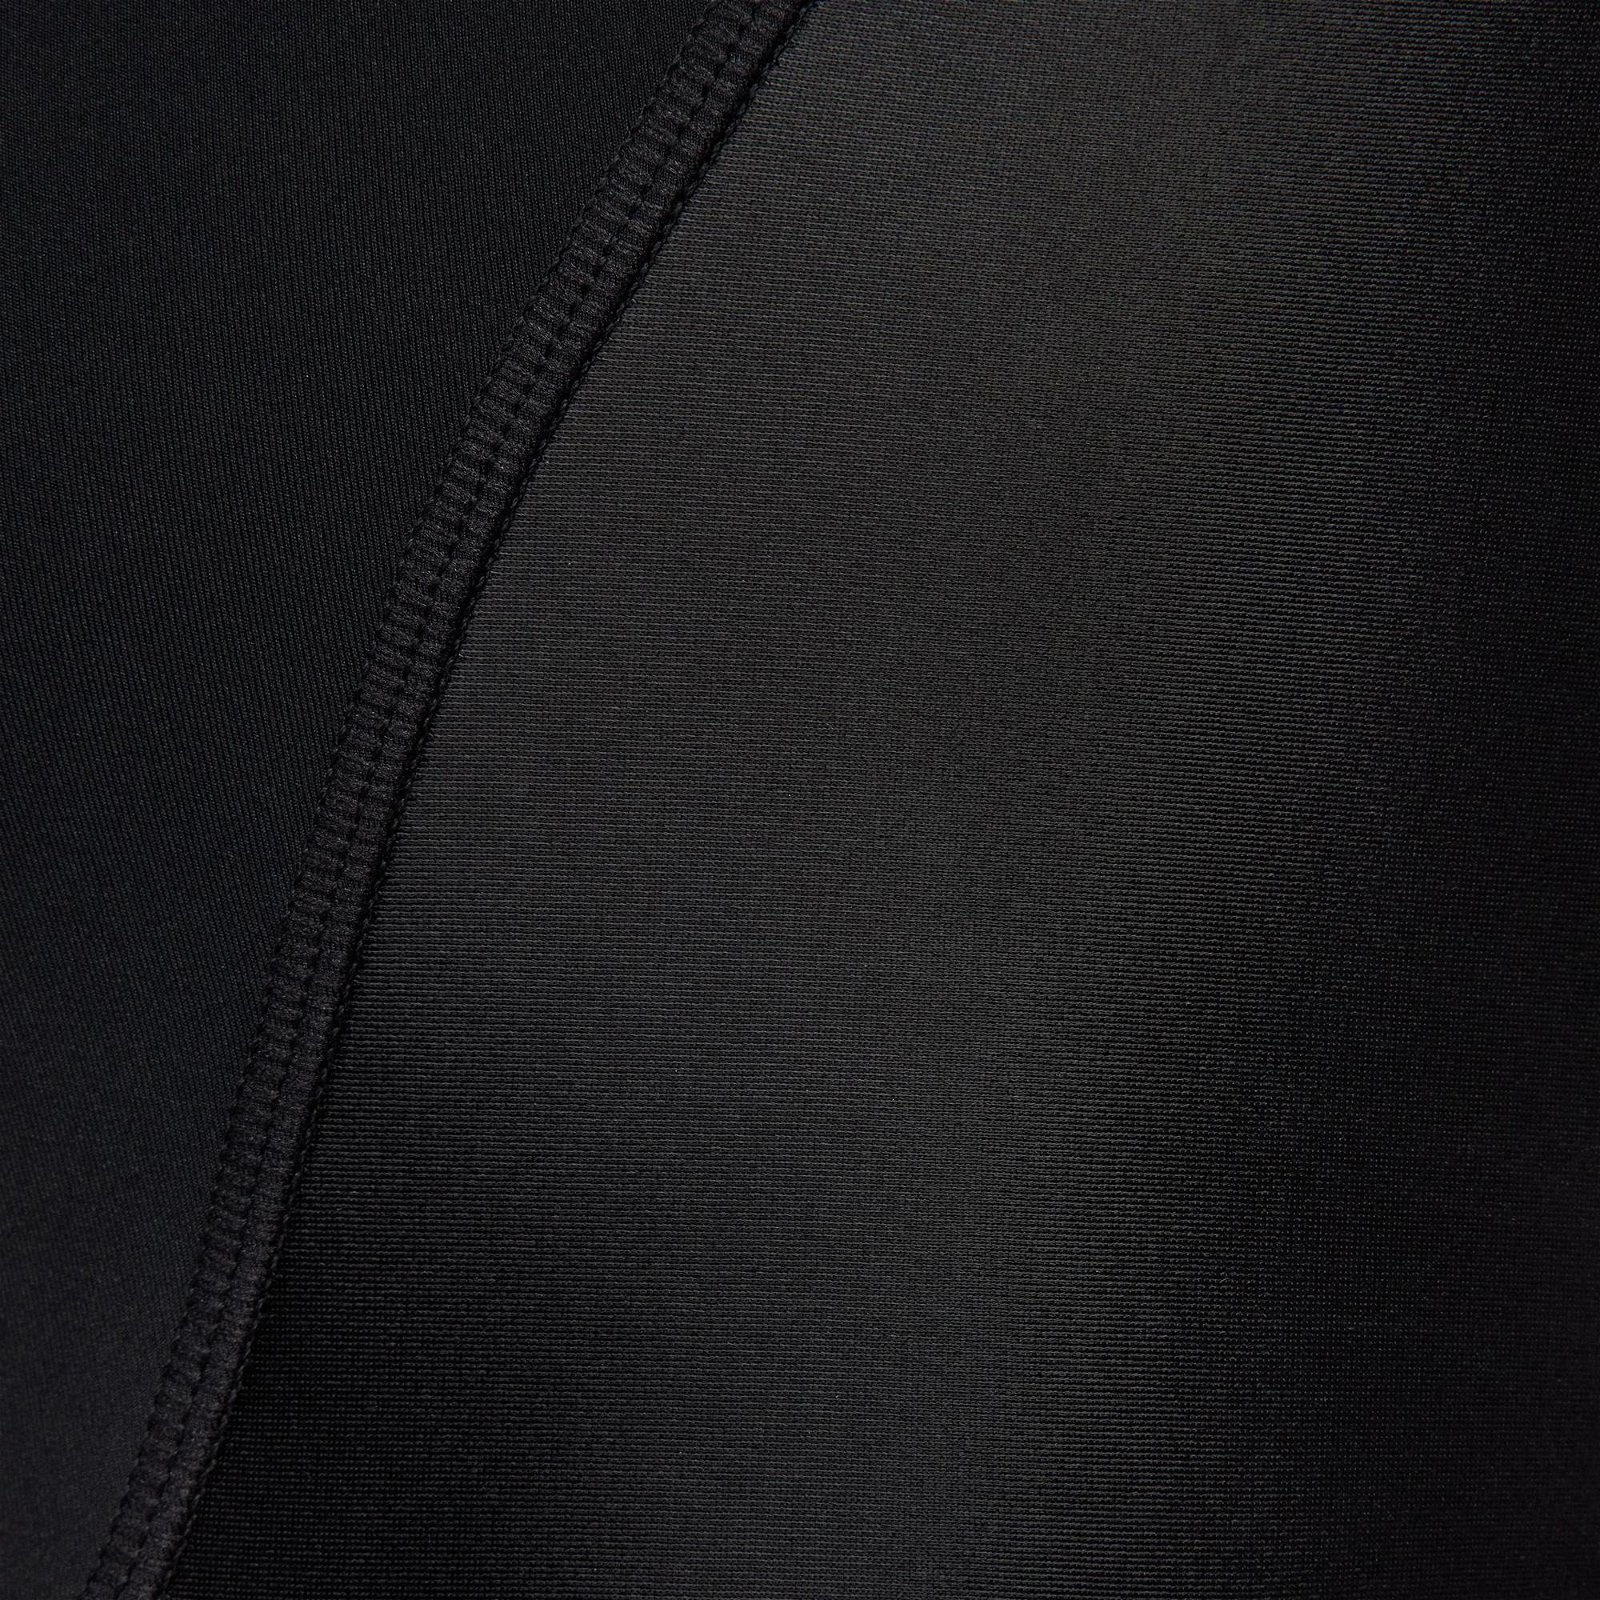 Nike Pro Dri-FIT Crop Tank Shine Kadın Siyah Kolsuz T-Shirt